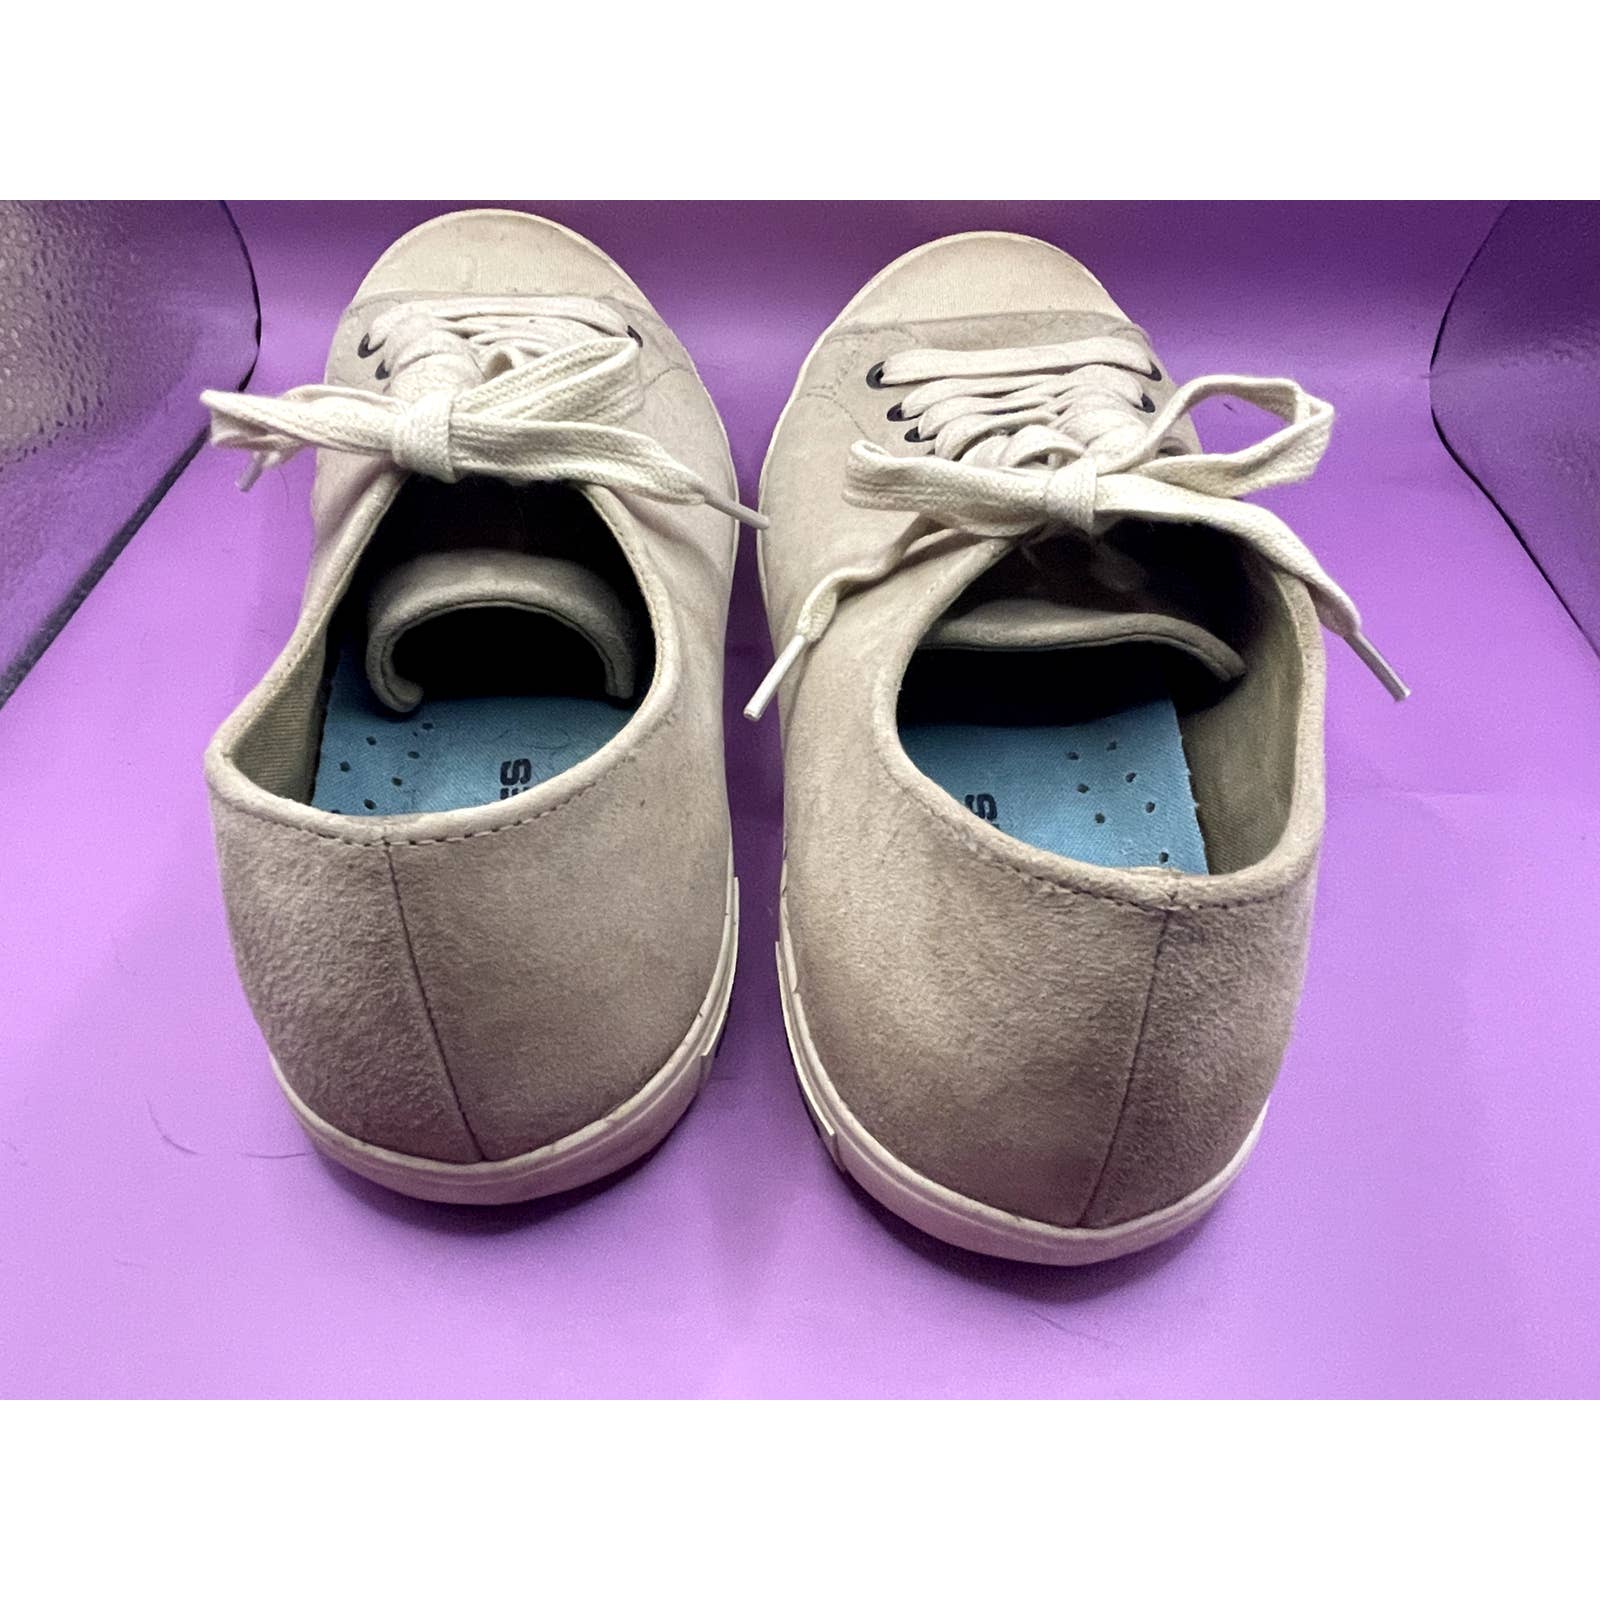 SeaVees Army Issue Low Tan Suede Cap Toe Sneakers - 12